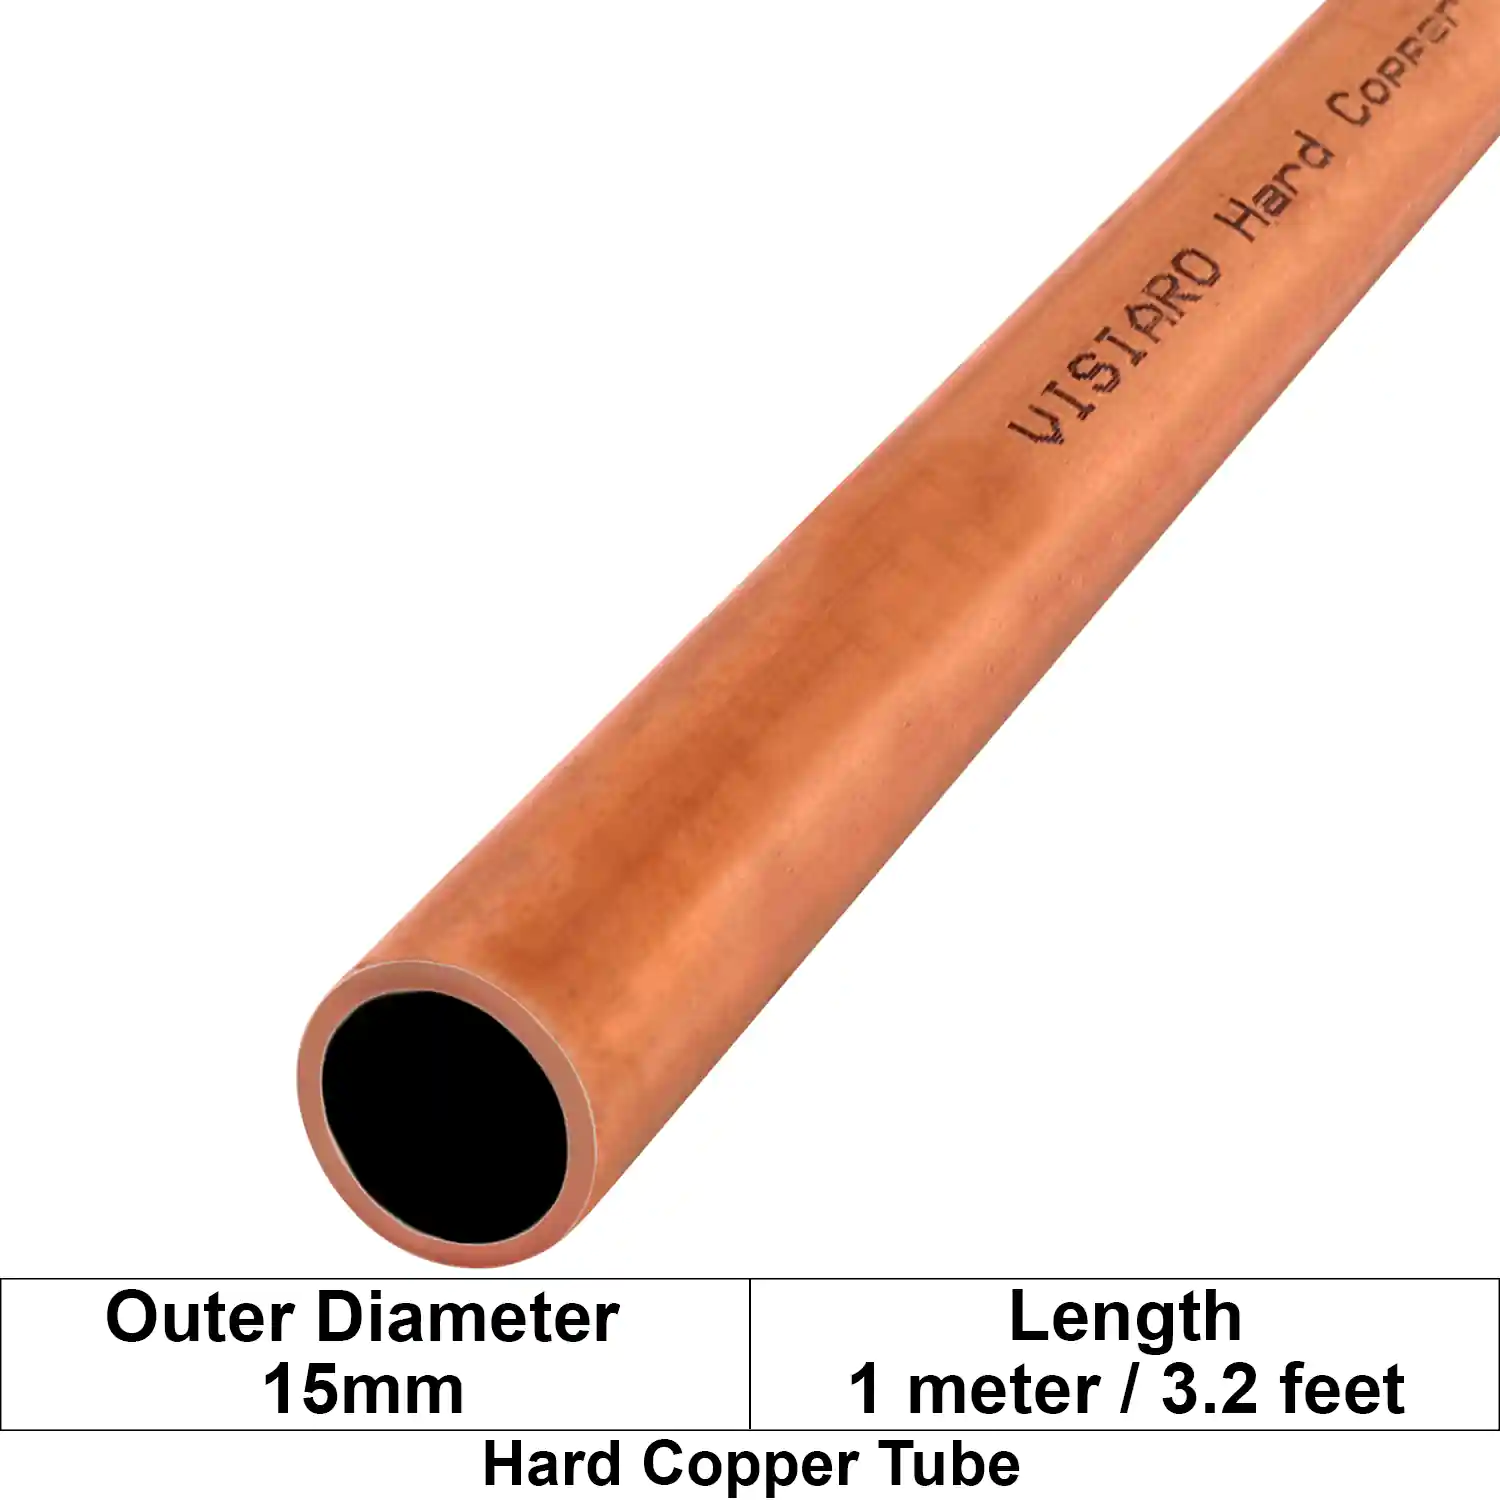 Visiaro Hard Copper Tube 1mtr long Outer Diameter - 15 mm